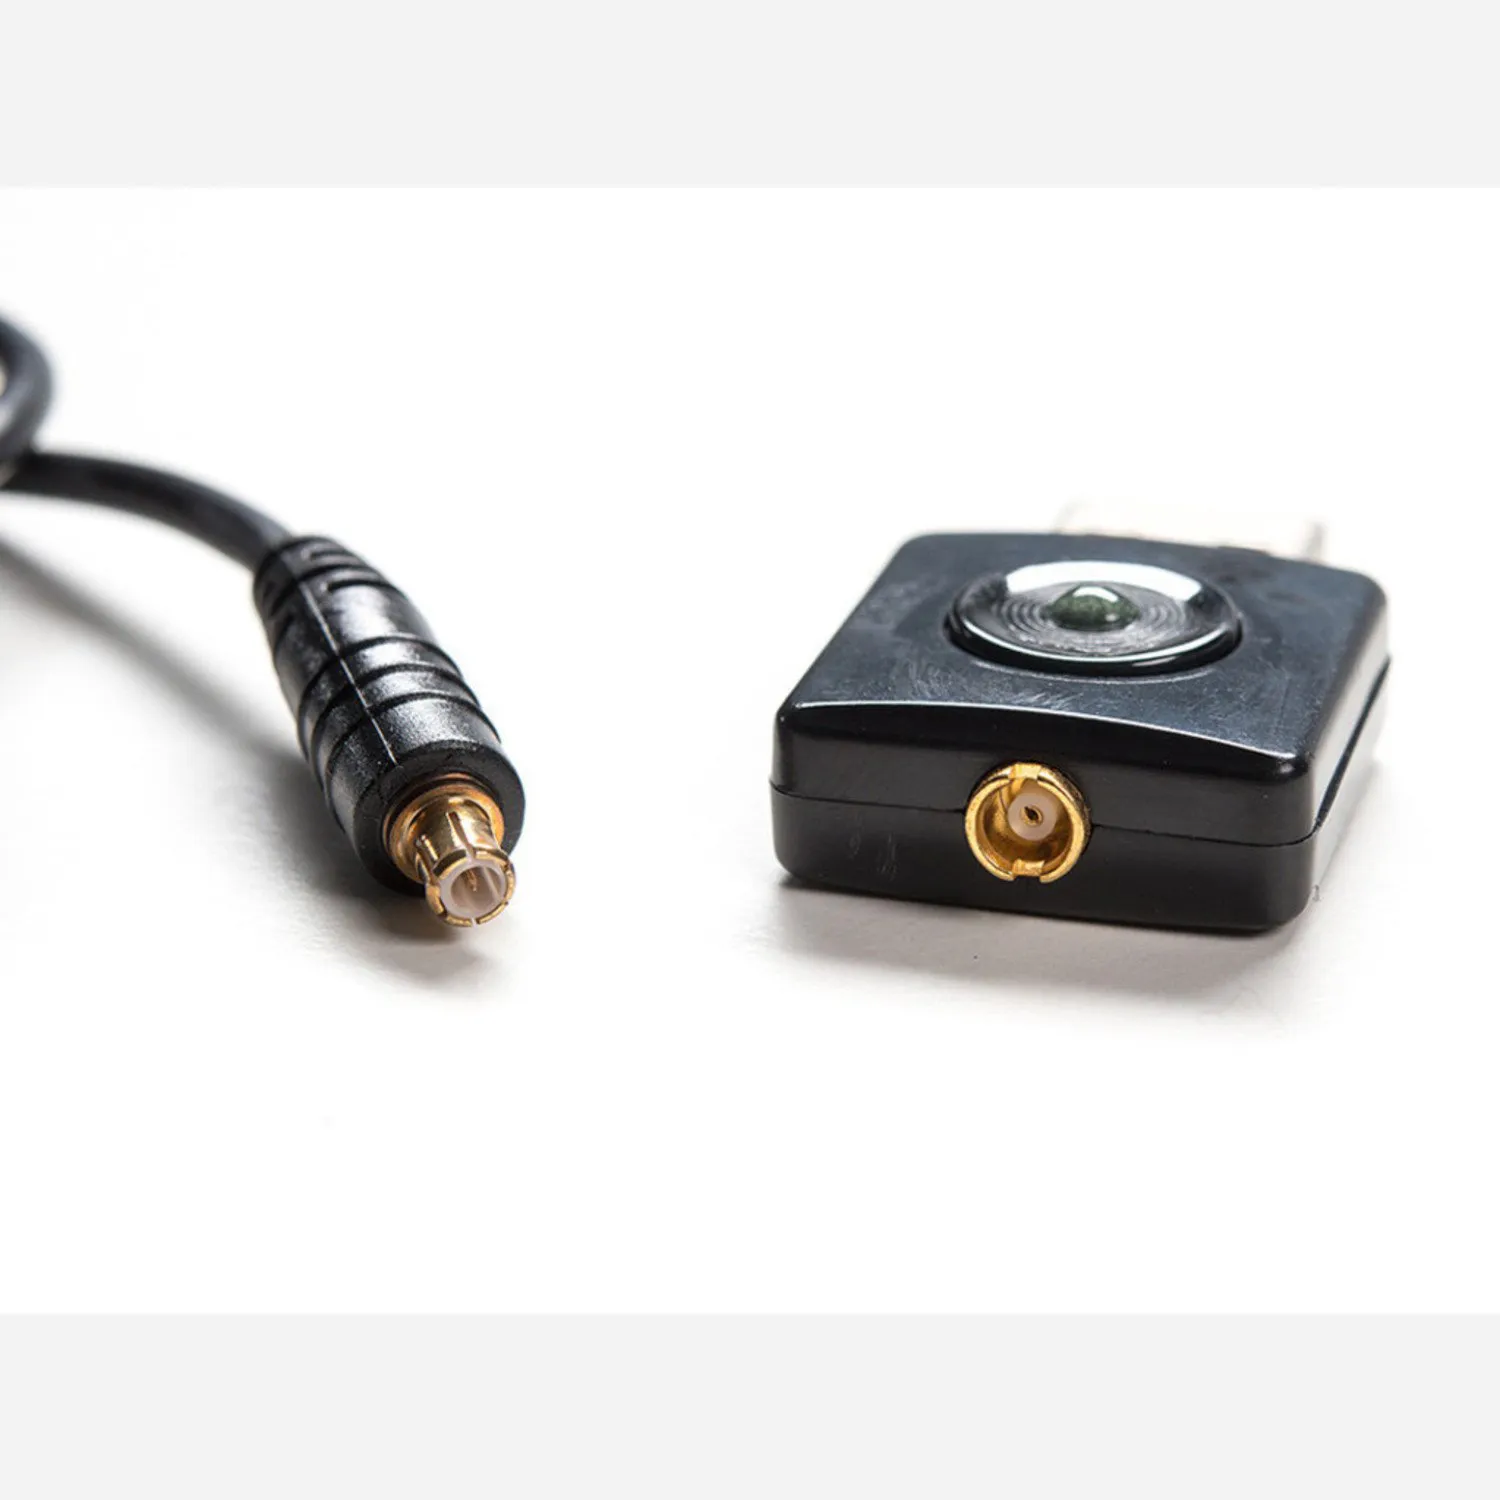 Photo of Software Defined Radio Receiver USB Stick - RTL2832 w/R820T